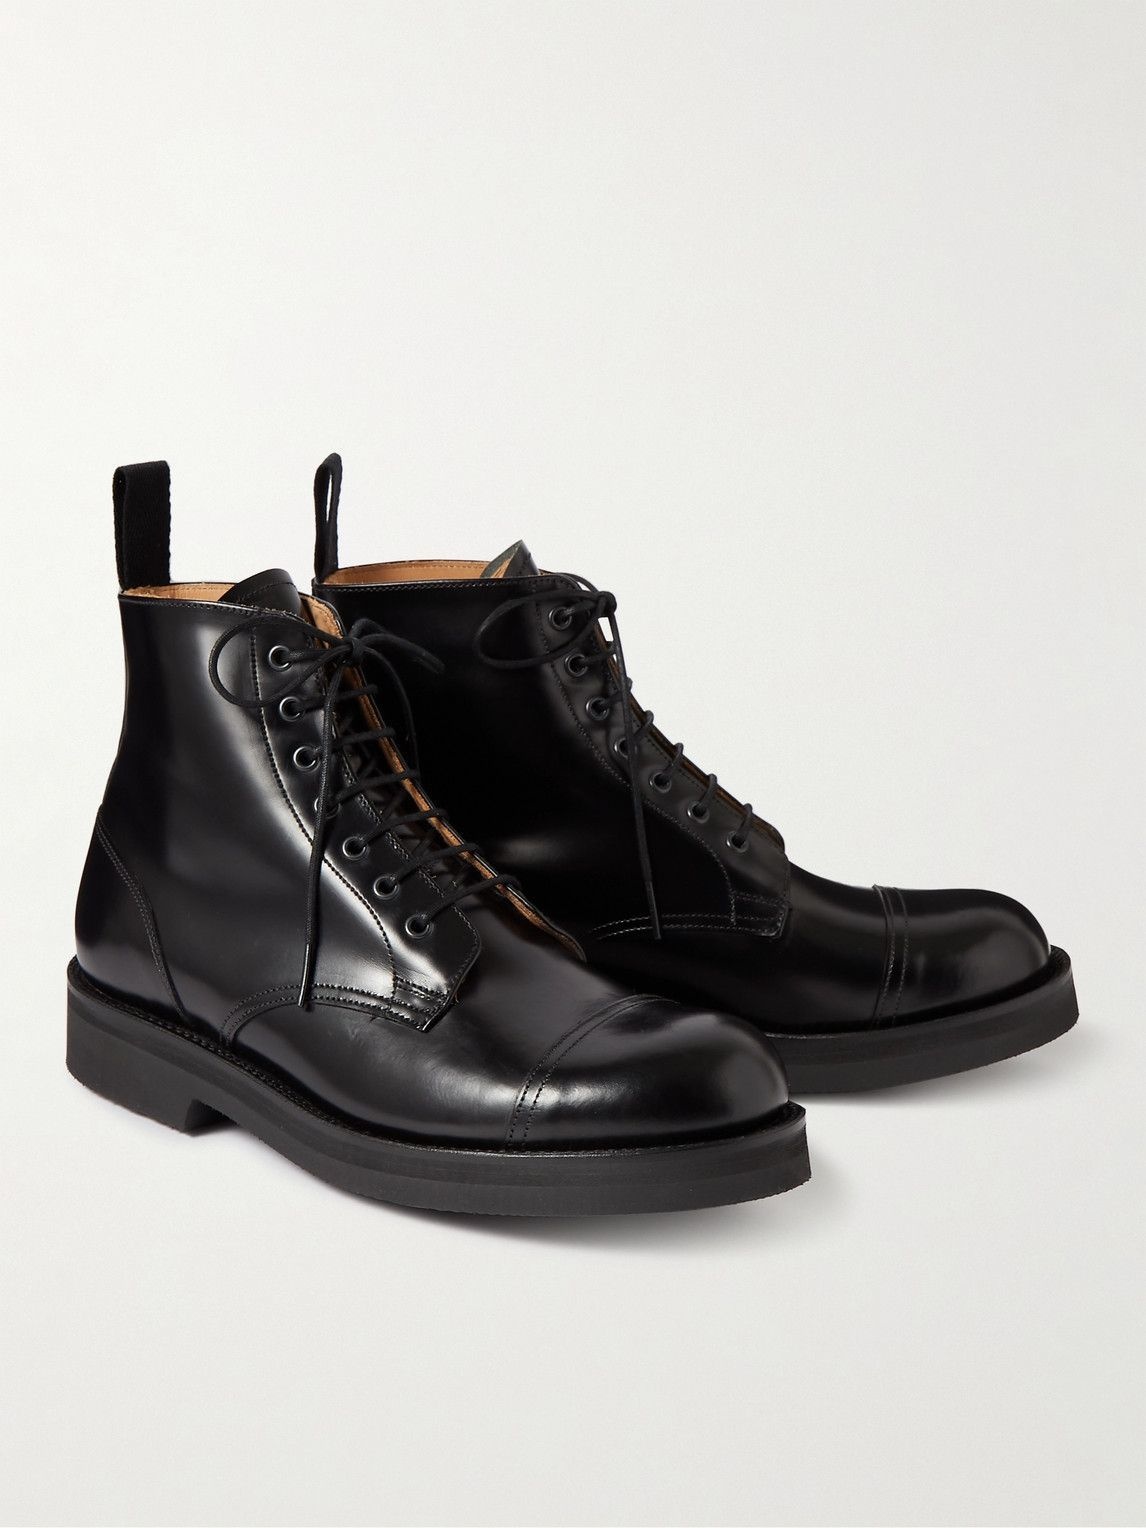 Grenson - Desmond Leather Boots - Black Grenson